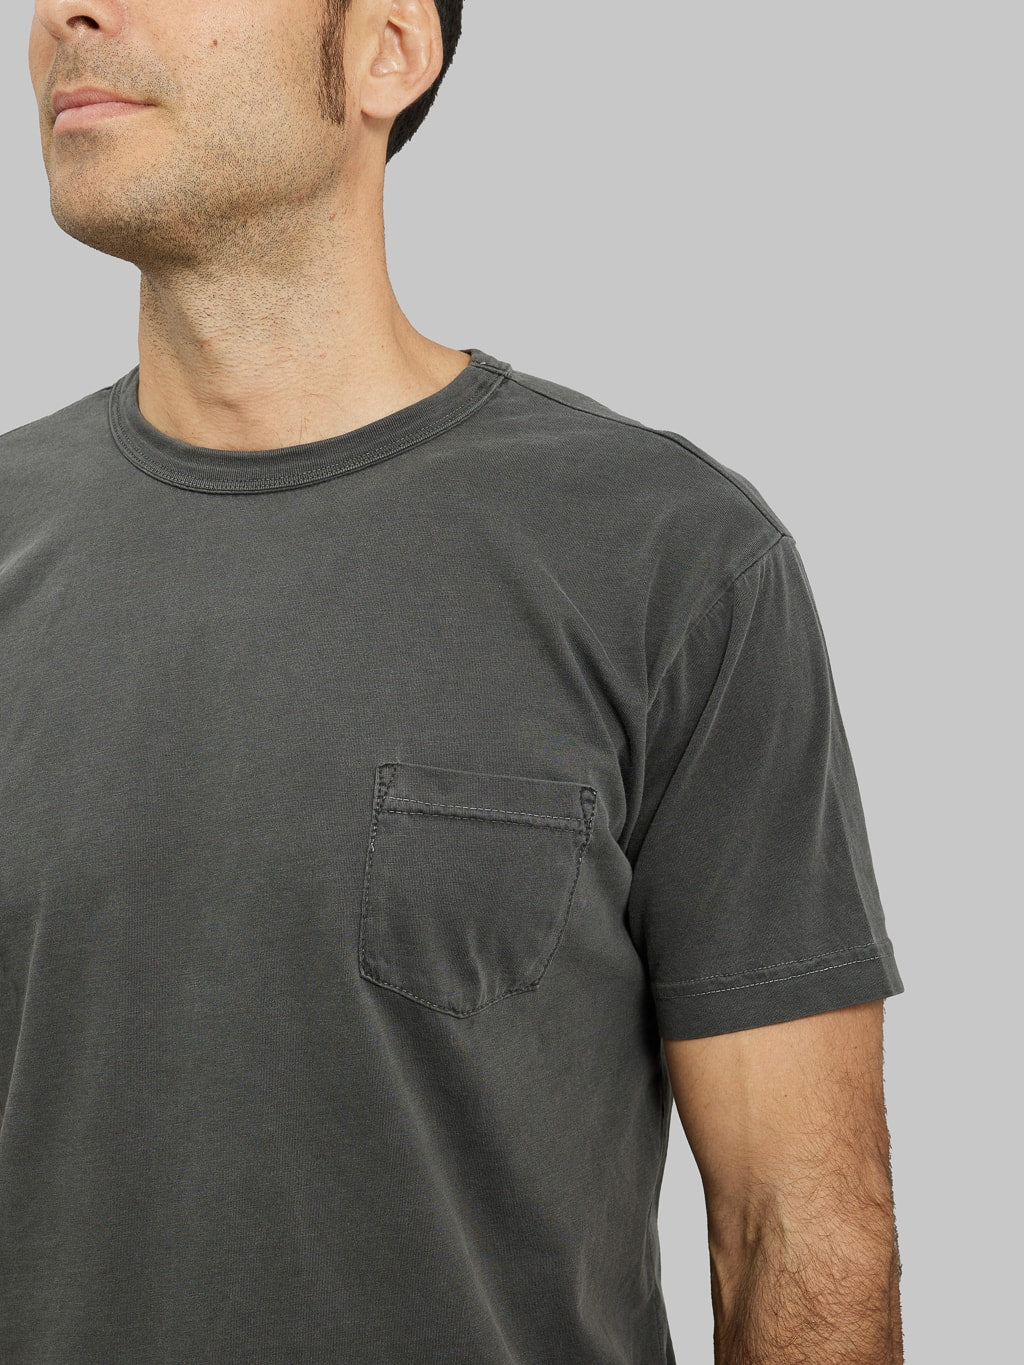 3sixteen Garment Dyed Pima Pocket Tshirt smoke chest details